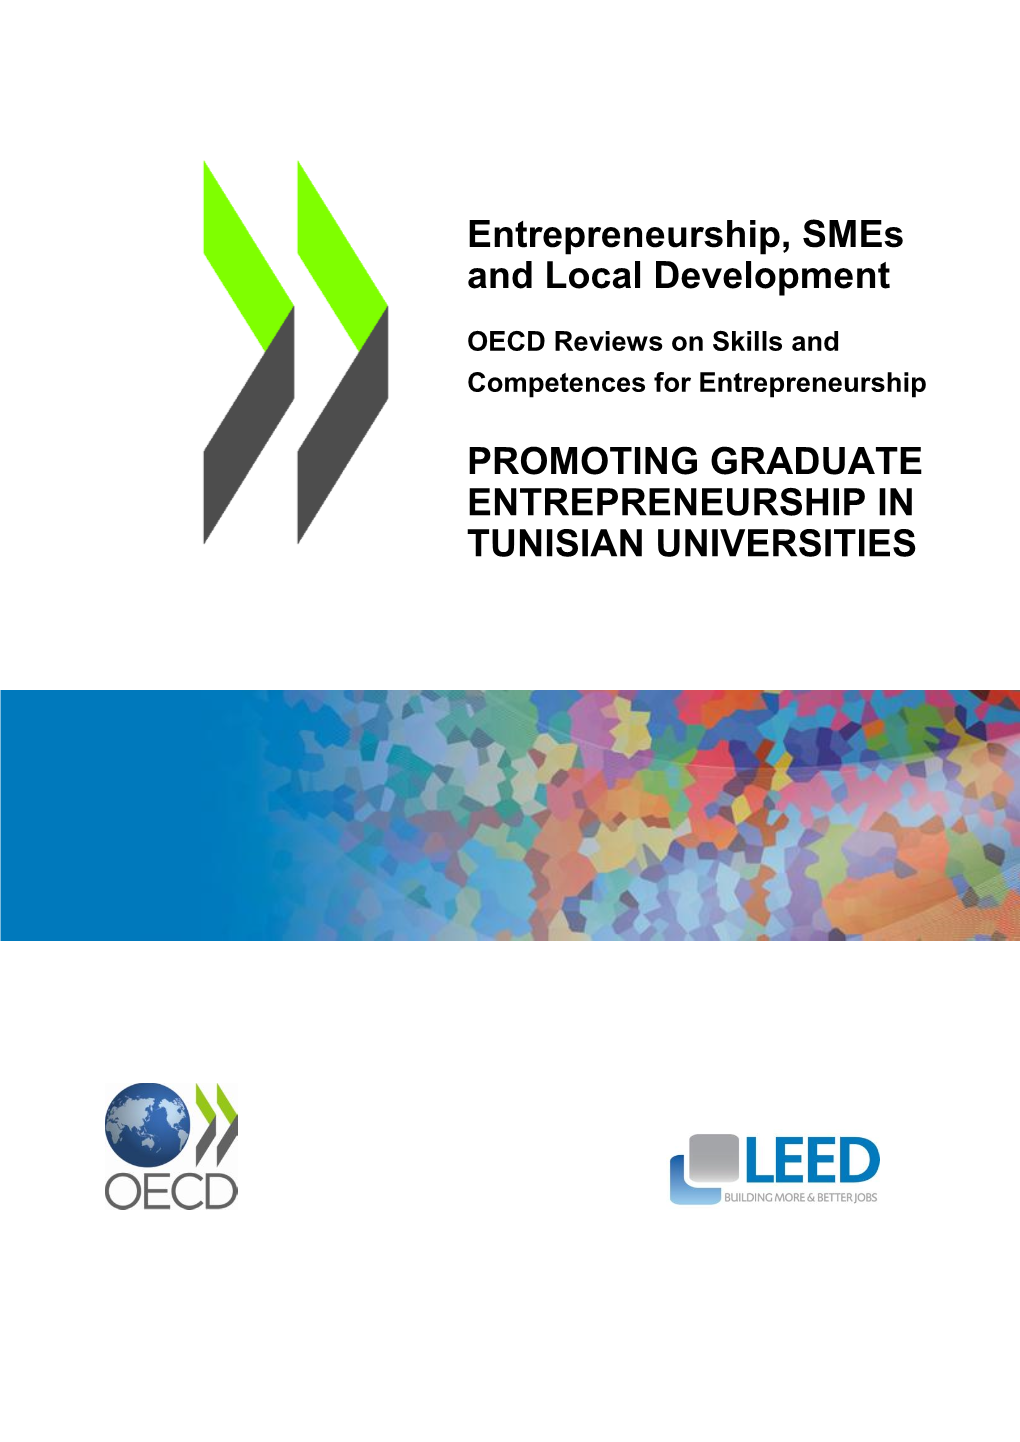 Promoting Graduate Entrepreneurship in Tunisian Universities